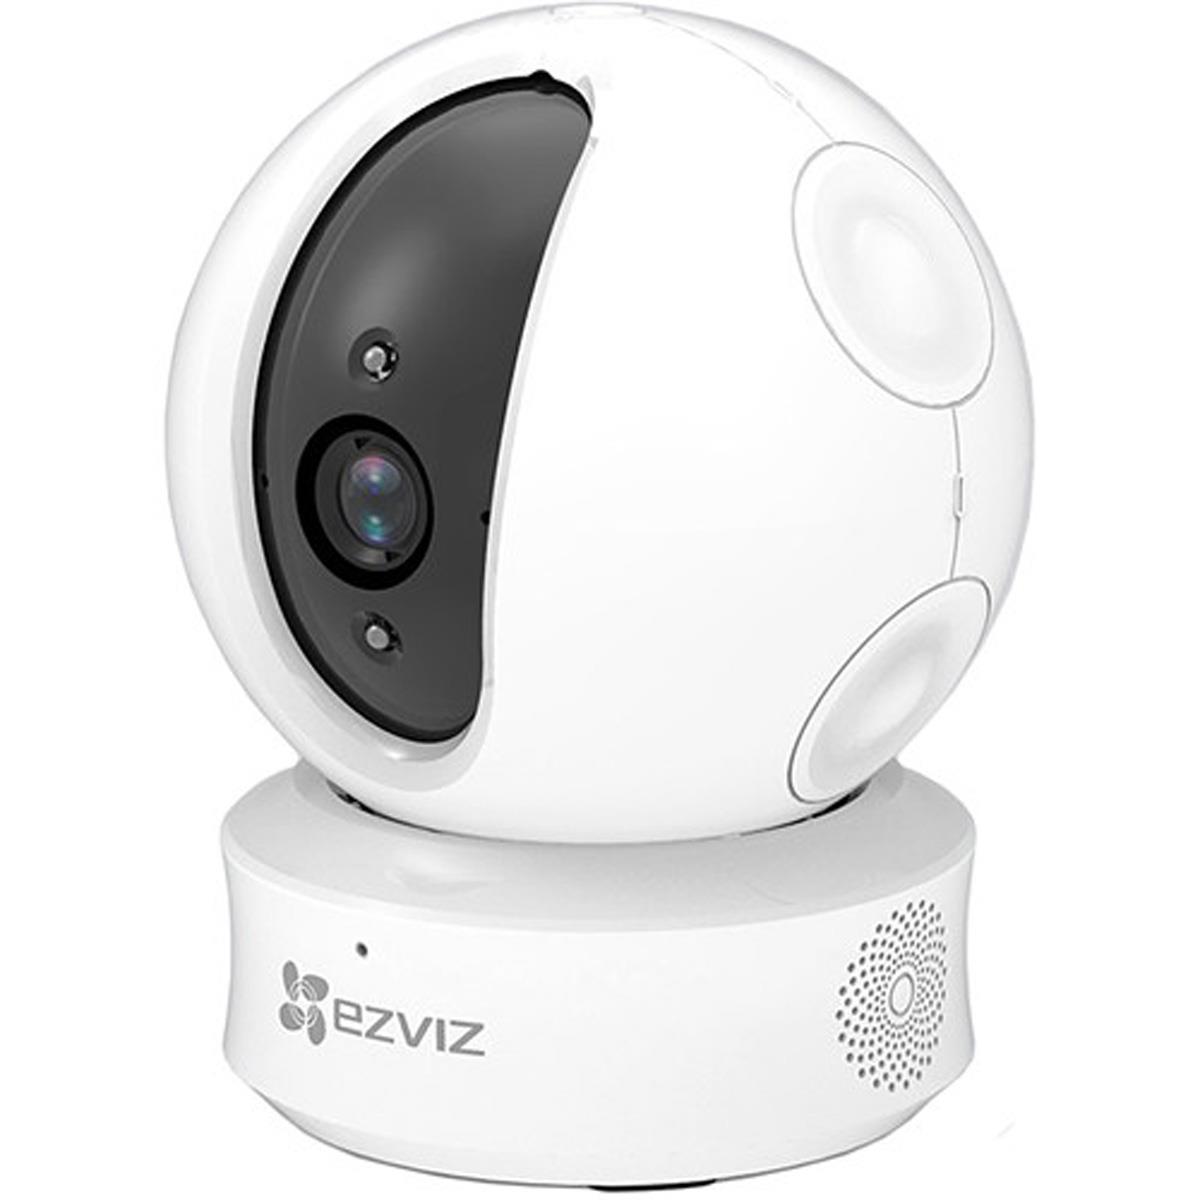 

EZVIZ ez360 1080p HD Pan/Tilt/Zoom WiFi Home Security Camera, White